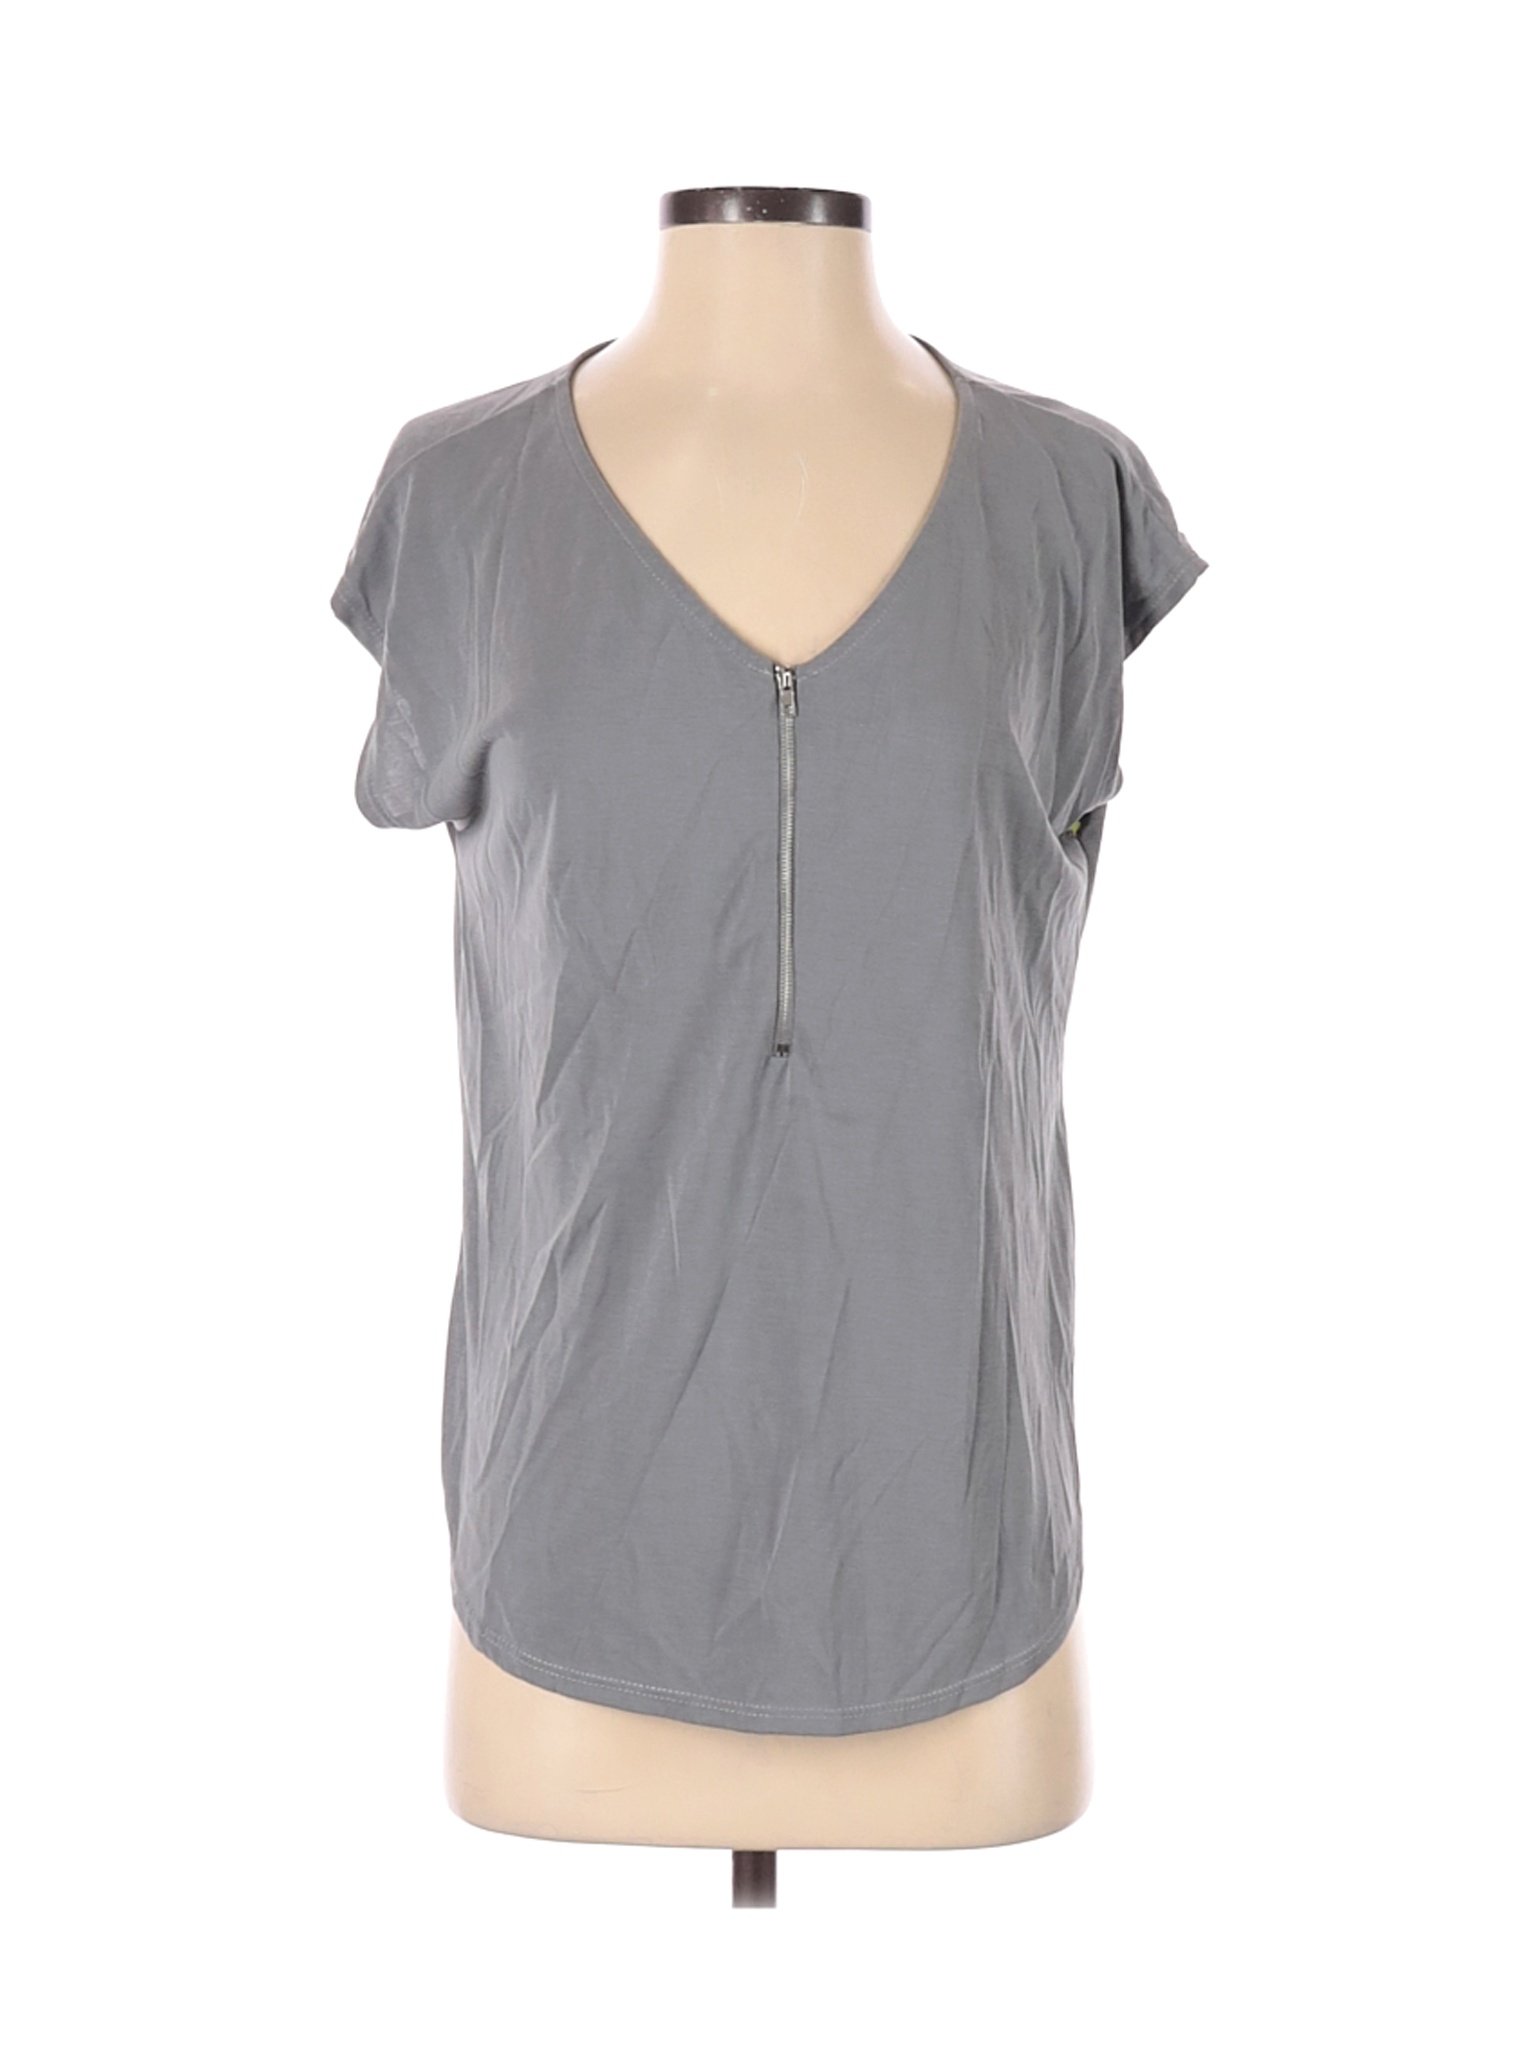 Green Envelope Women Gray Short Sleeve Top S | eBay